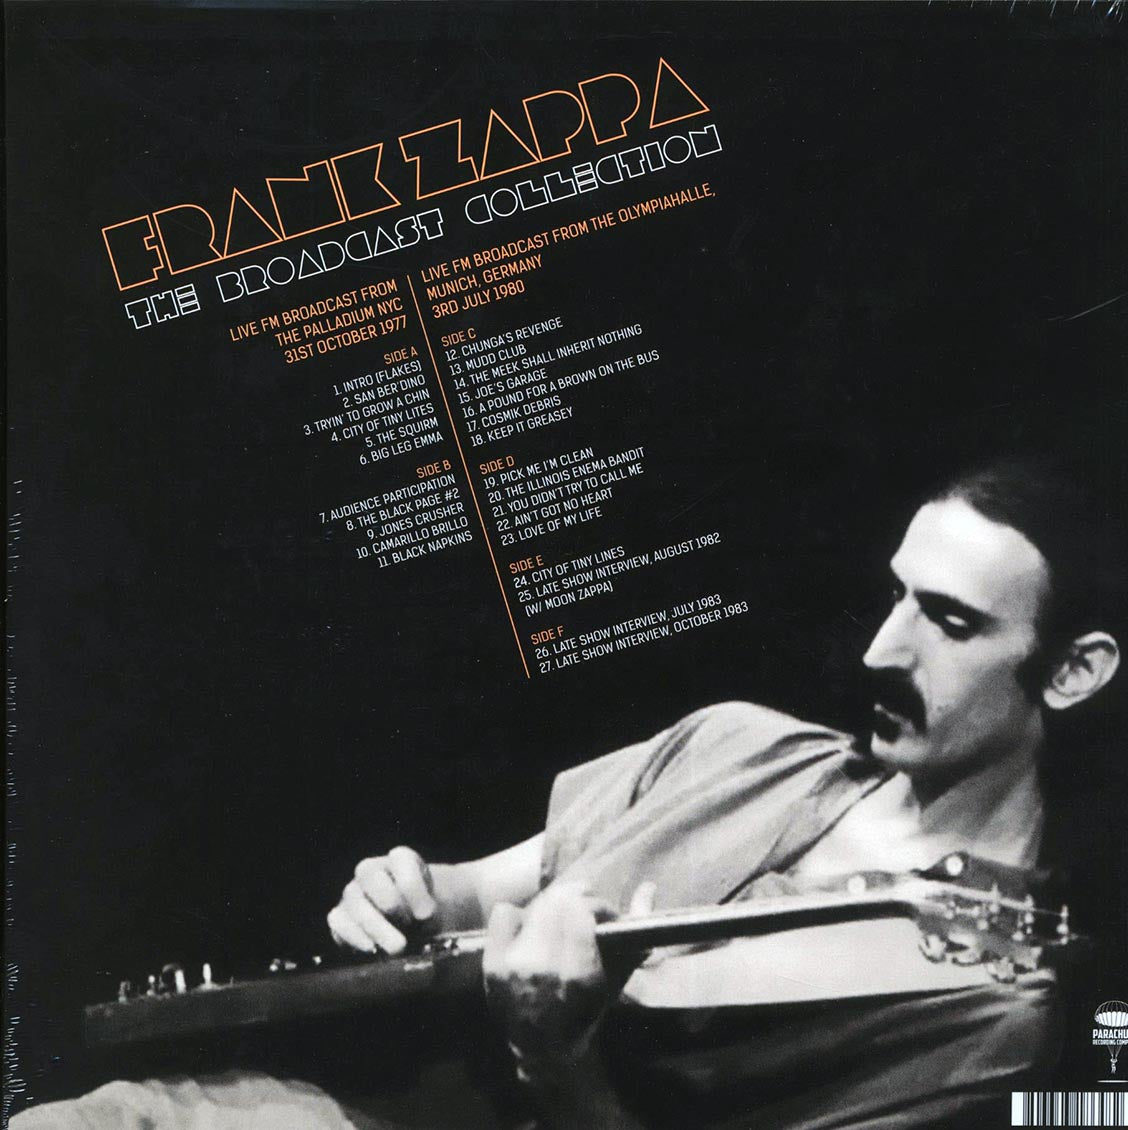 Frank Zappa - The Broadcast Collection (casebound set) (ltd. ed.) (3xLP) (box set) - Vinyl LP, LP